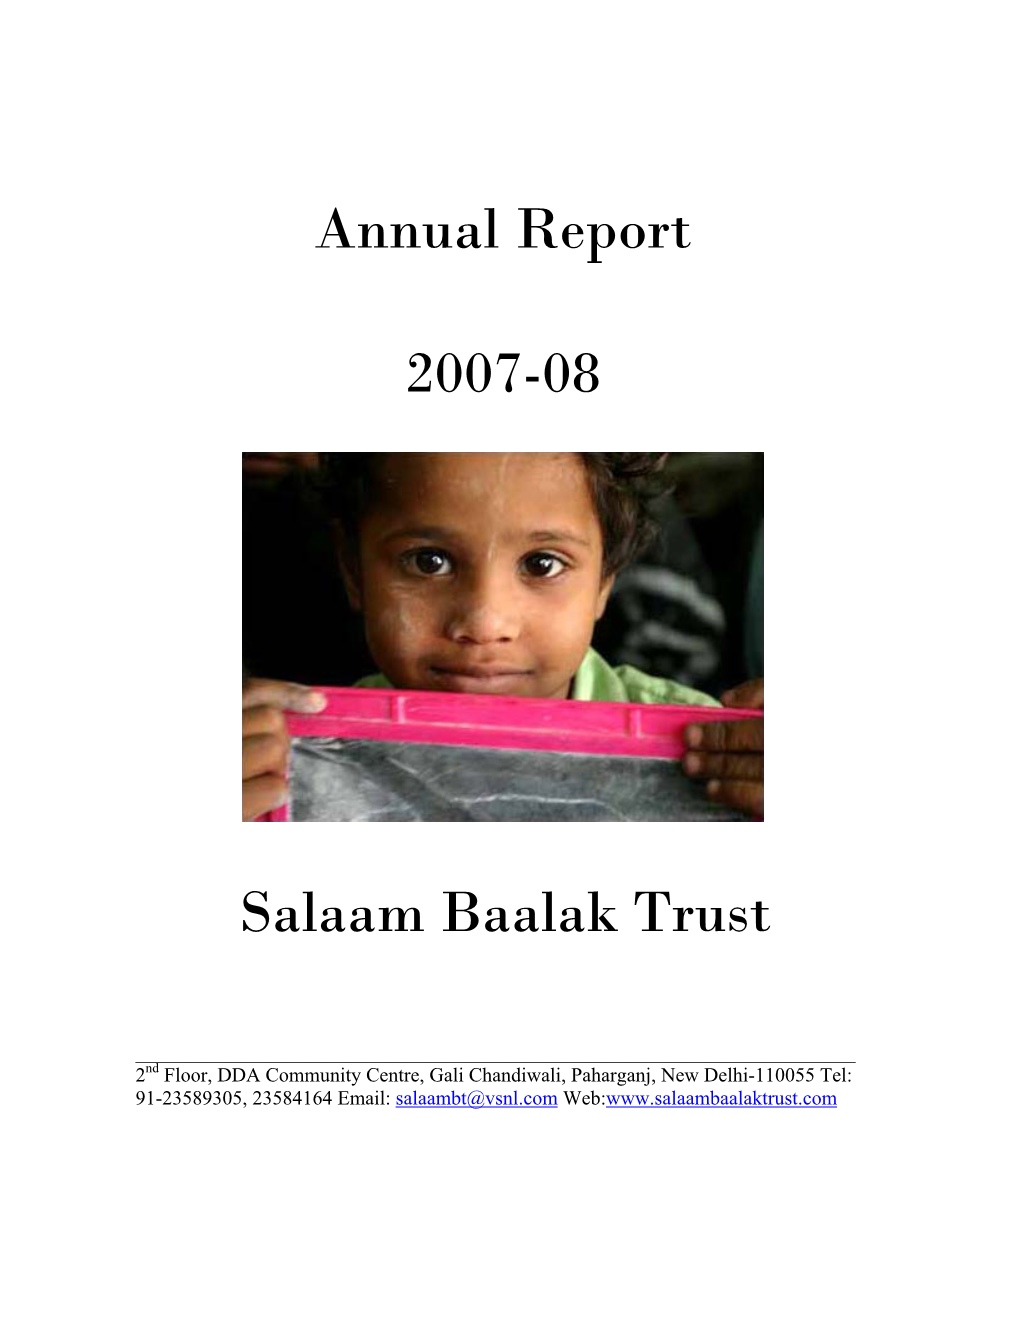 Annual Report 2007-08 Salaam Baalak Trust